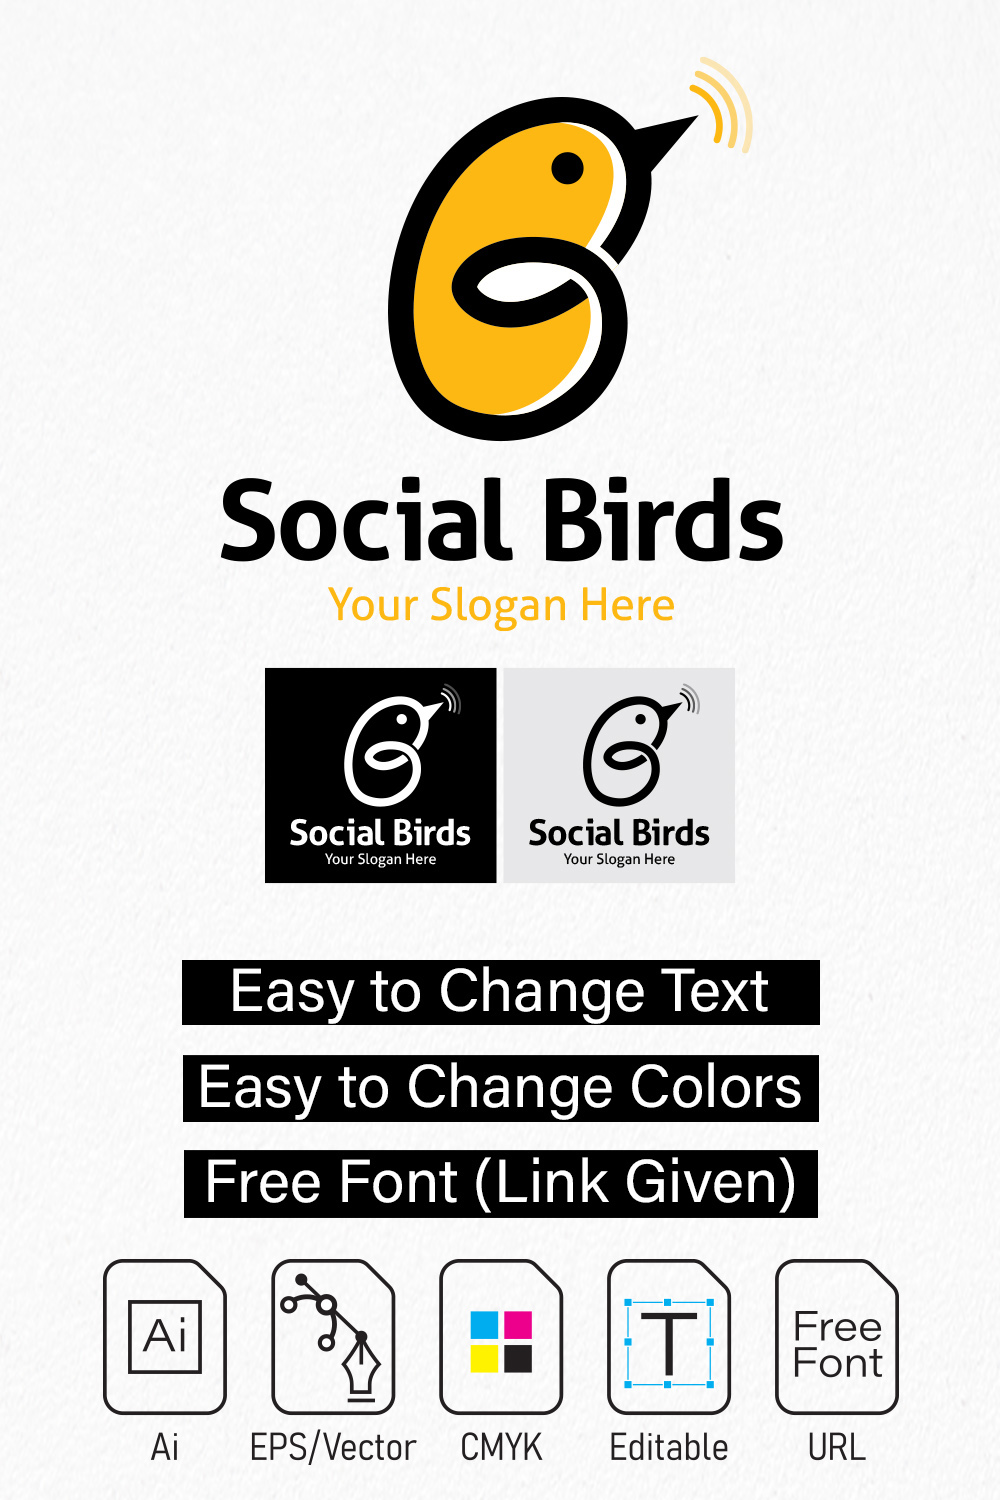 social birds logo pinterest image